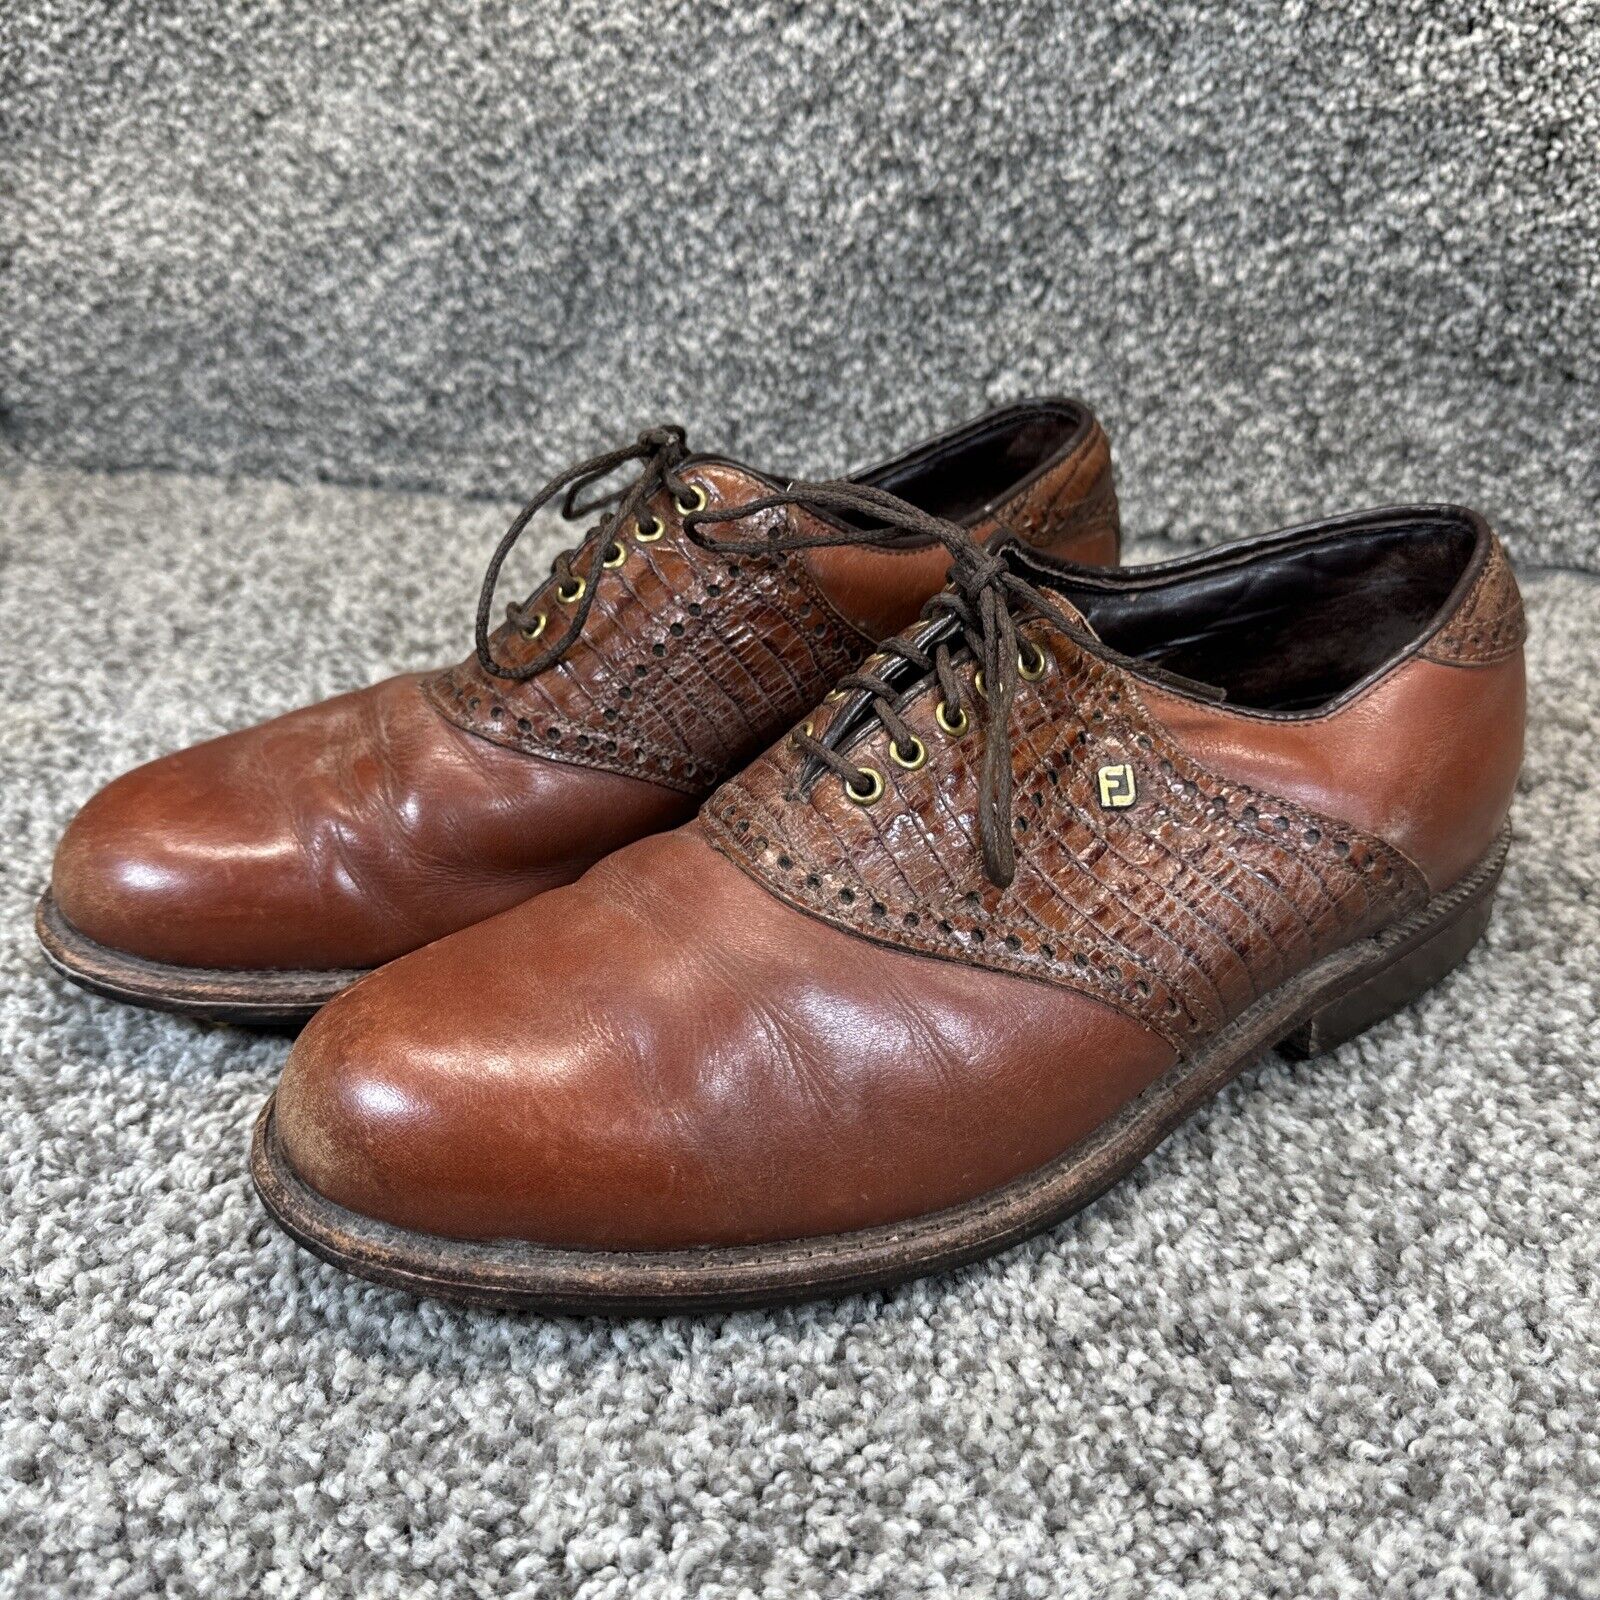 FootJoy Mens Classics Dry Premiere Golf Shoes Brown Leather Lizard Size 8.5